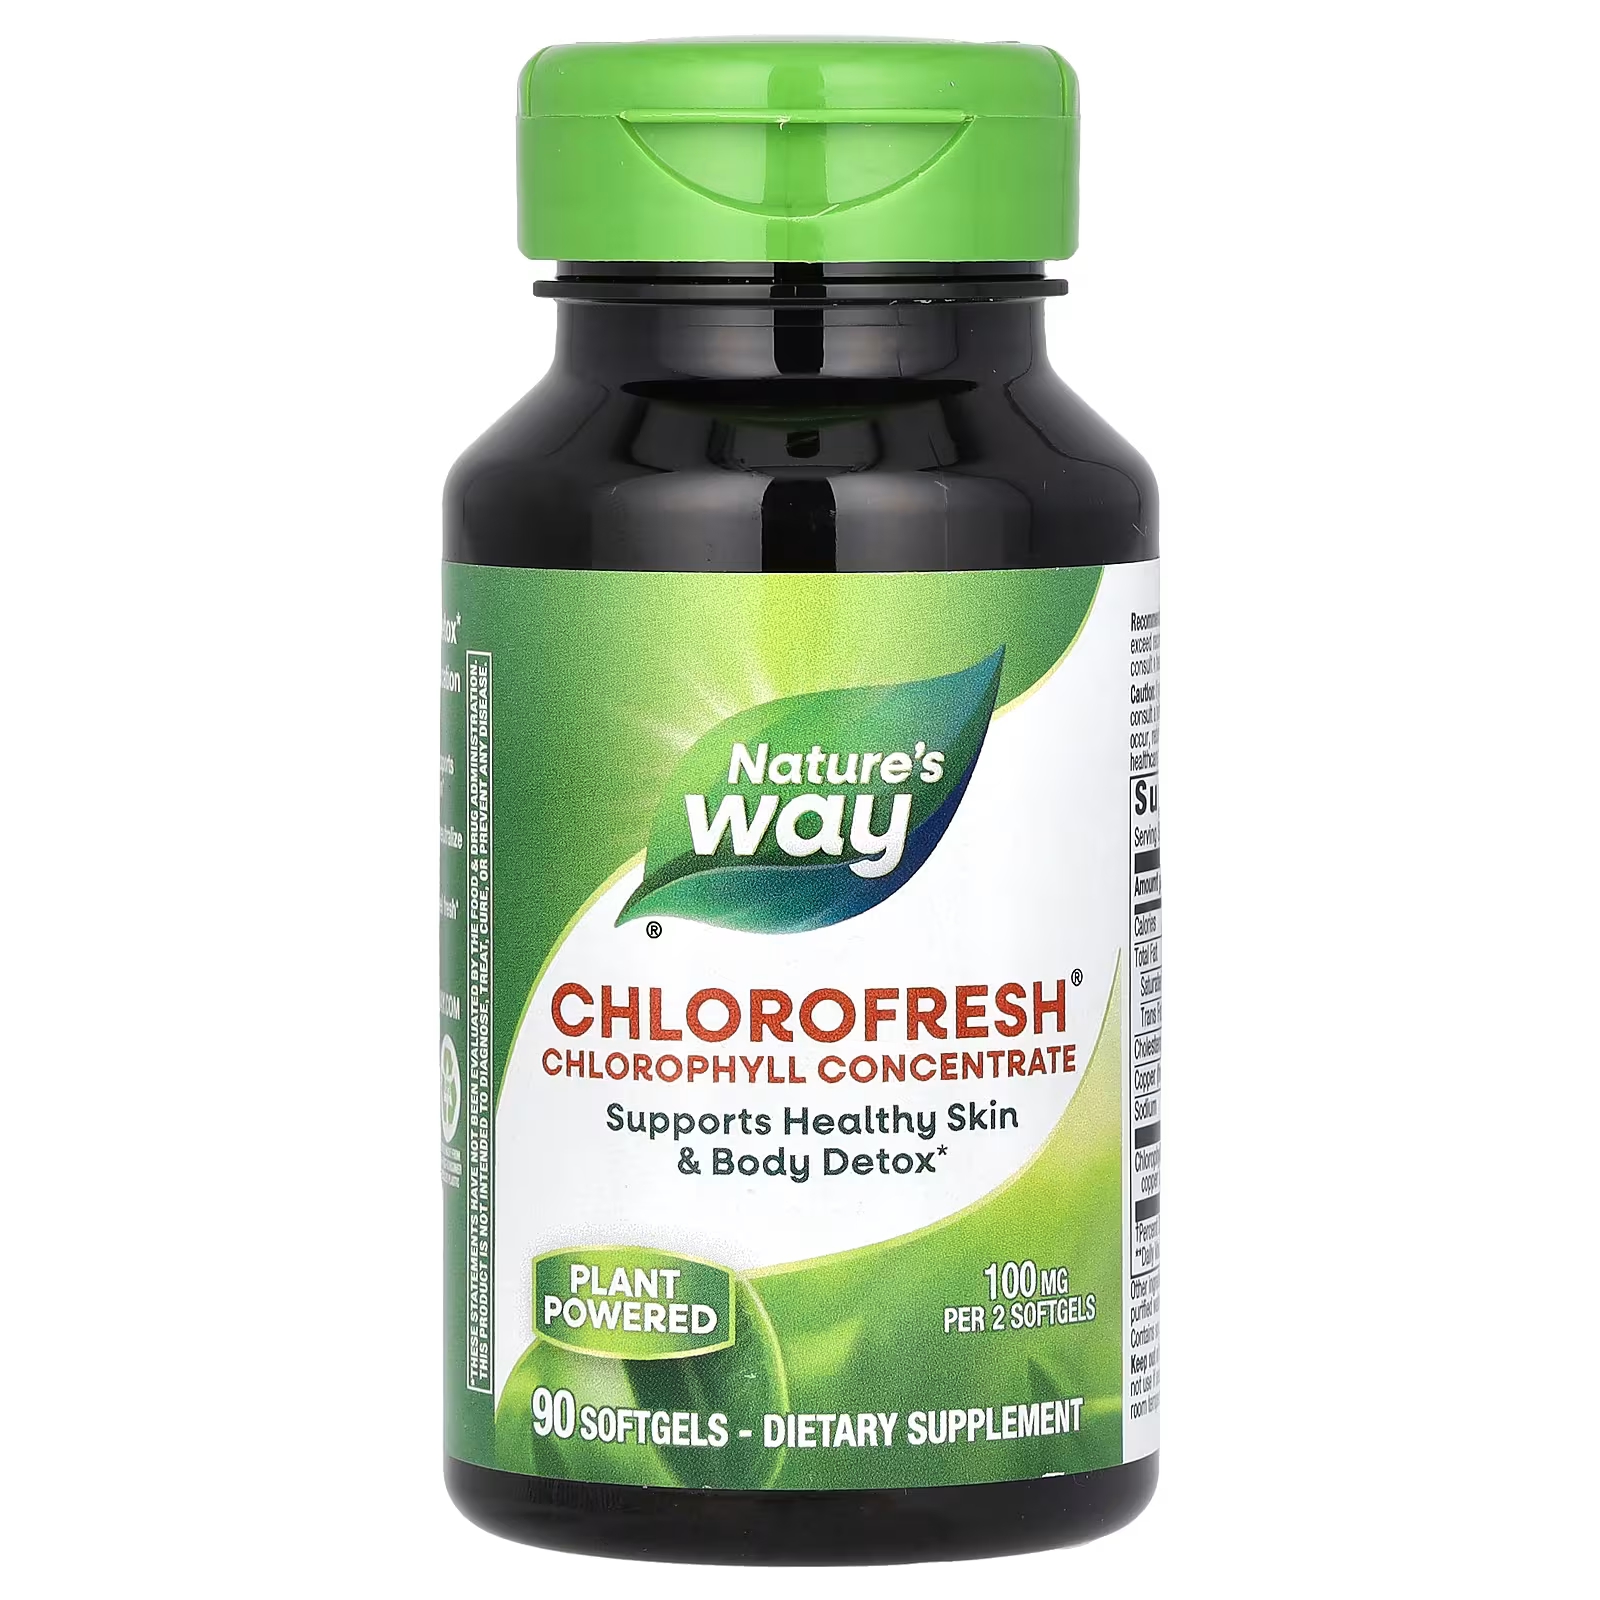 Nature's Way Chlorofresh Концентрат хлорофилла, 90 мягких таблеток nature s way chlorofresh концентрат хлорофилла 100 мг 90 мягких таблеток 50 мг на мягкую таблетку